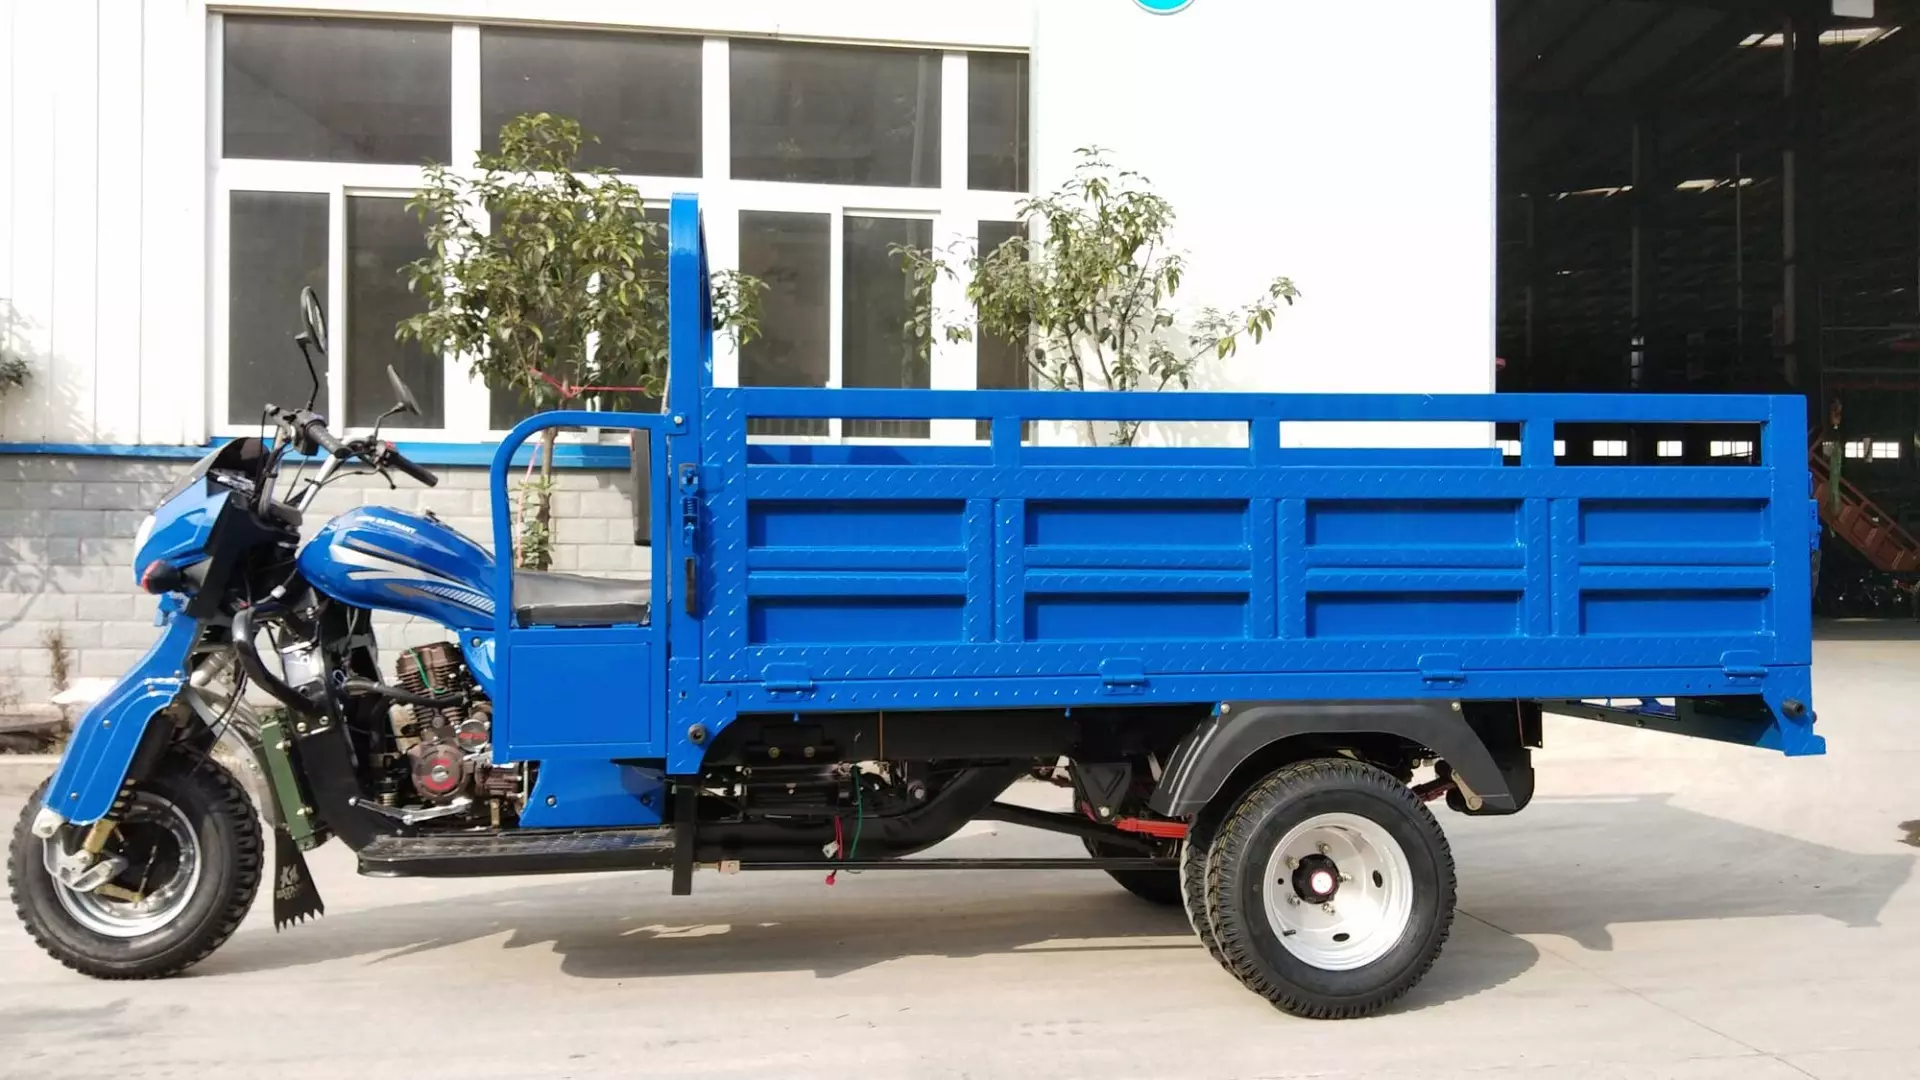 China Well sell truck rickshaw cargo petrol motorbikes 250cc motorized big wheel power motor cargo tricycle in indonesia